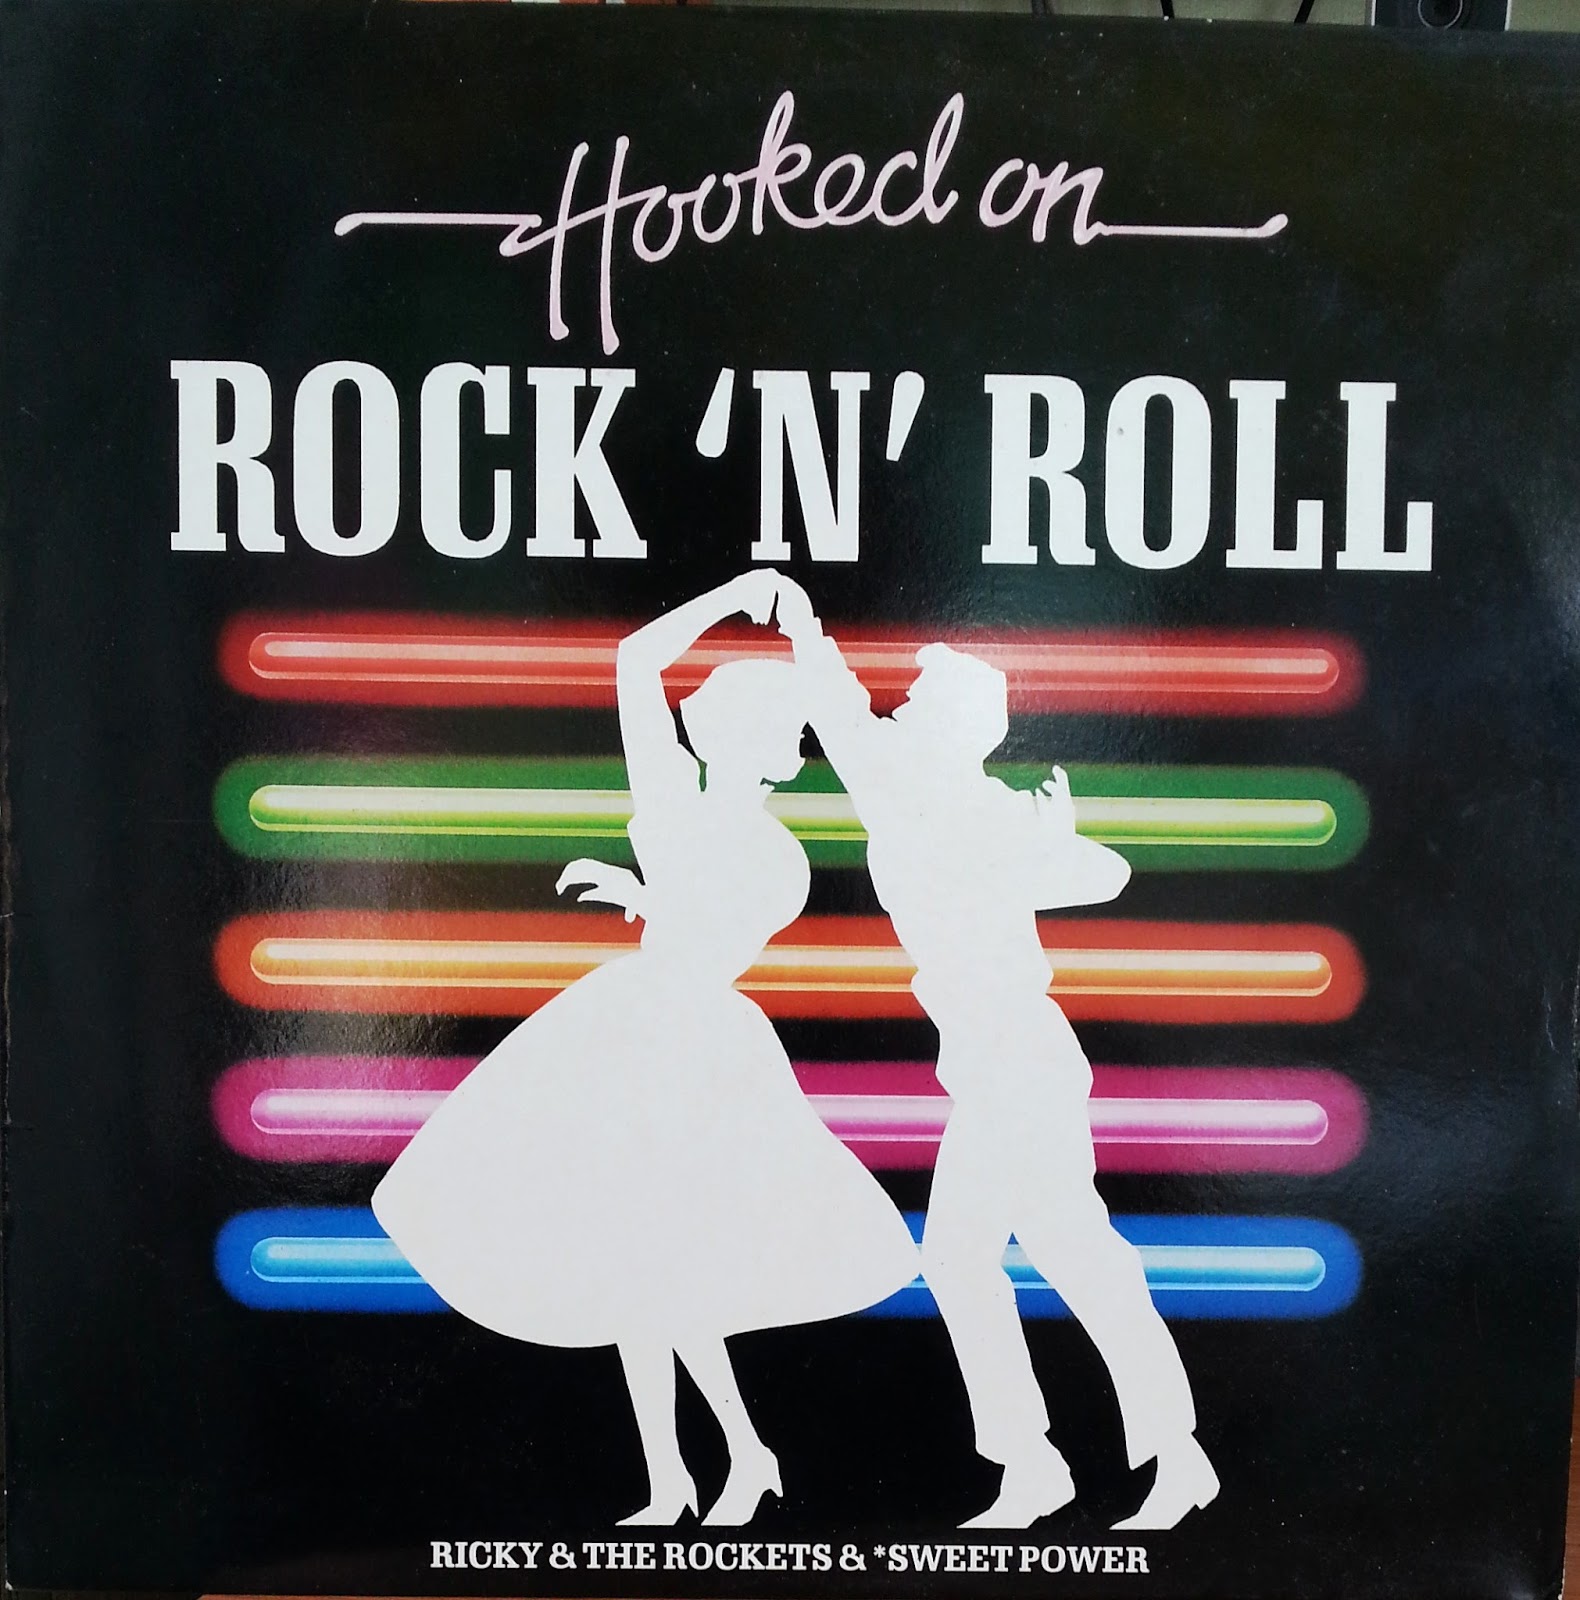 Rock i roll. Rock n Roll again винил. Редкие винил. Венгерский рок н ролл на виниле. Ricky King (1984) - Rock 'n' Roll Party обложка.